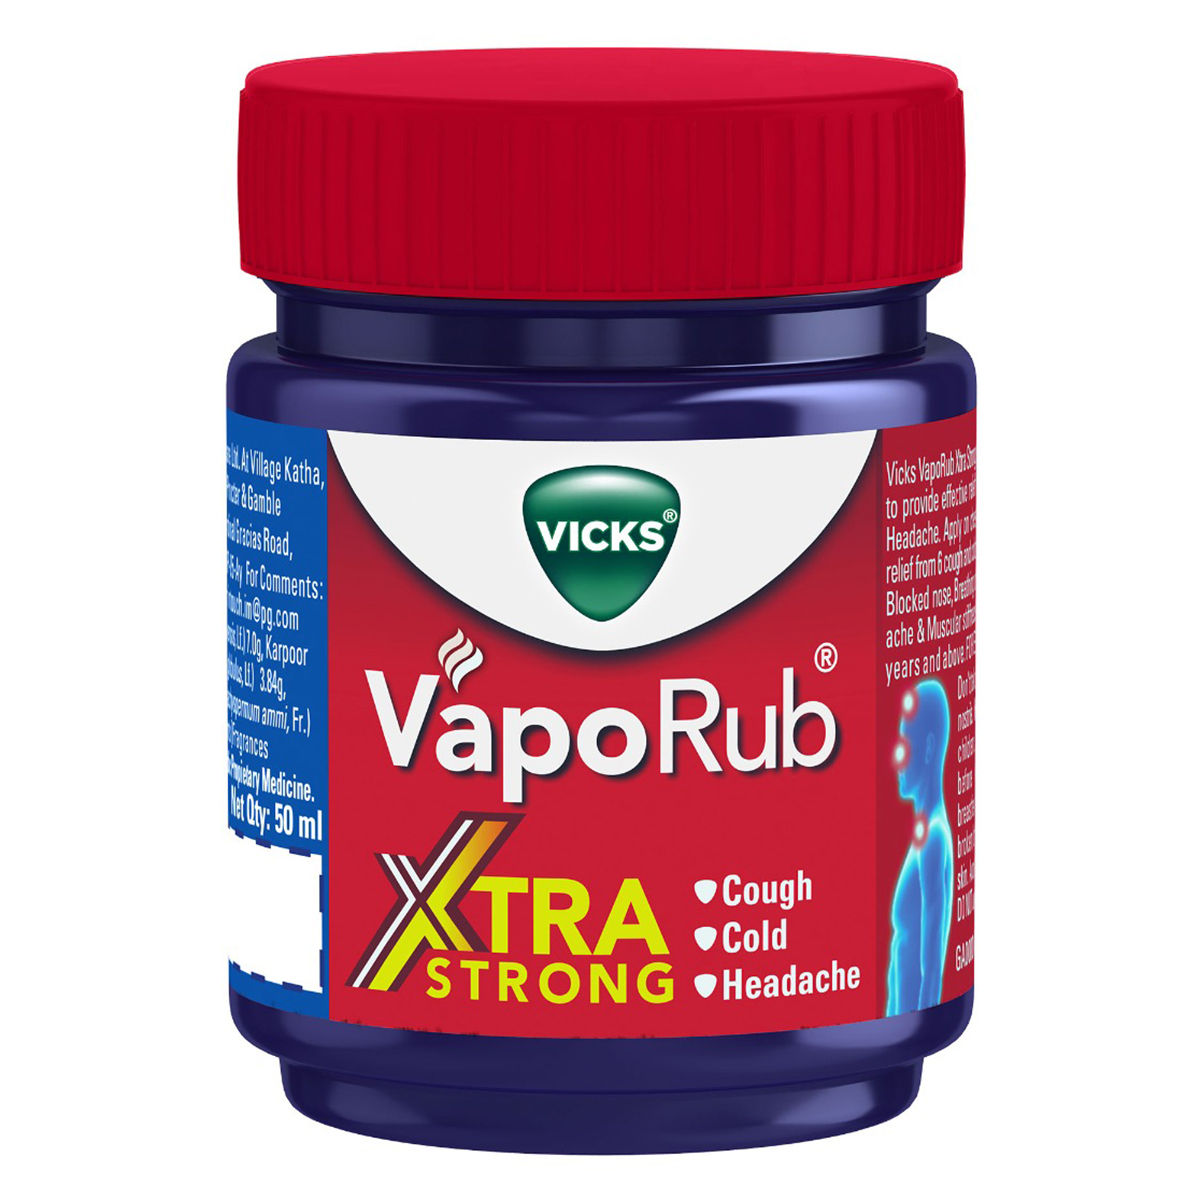 What Is Vicks VapoRub Good For?